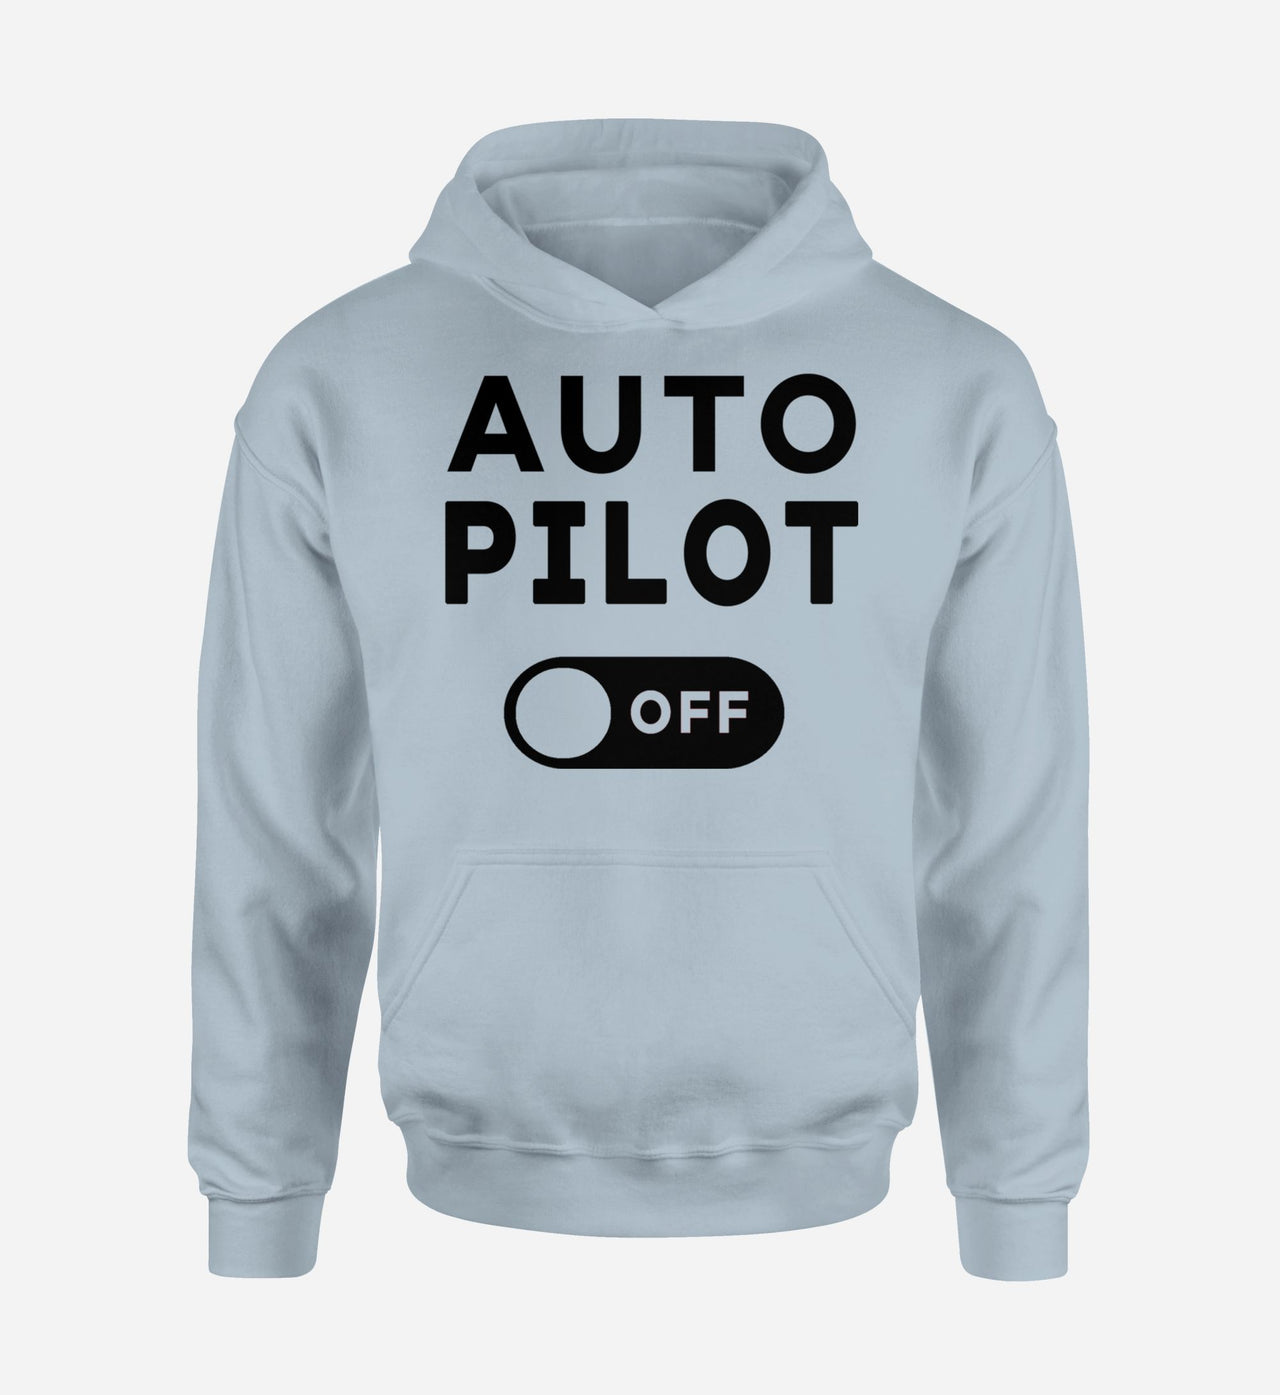 Auto Pilot Off Designed Hoodies